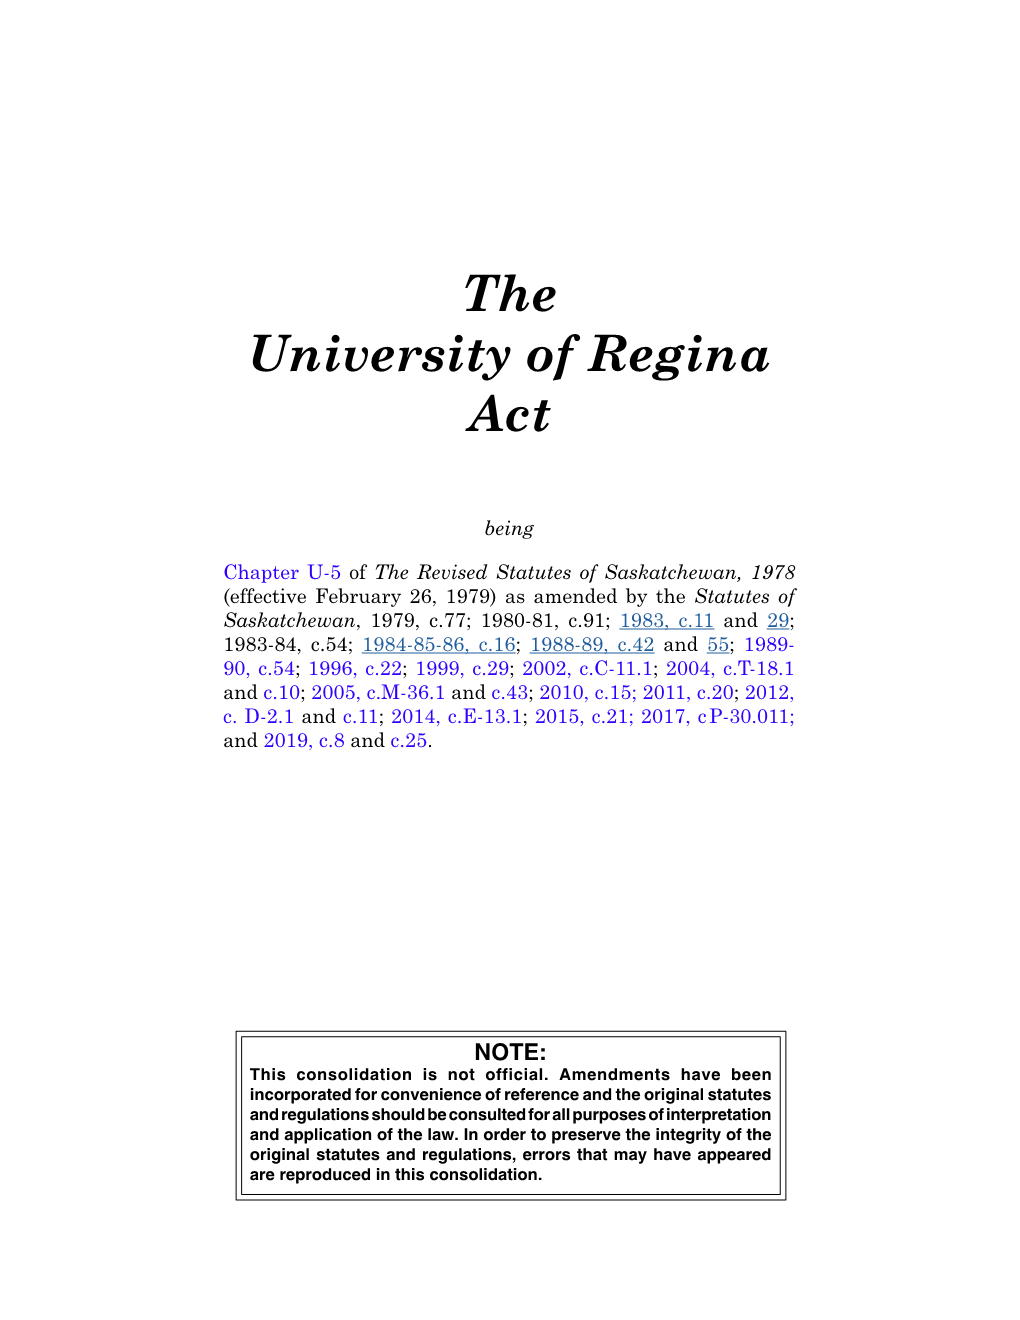 University of Regina Act